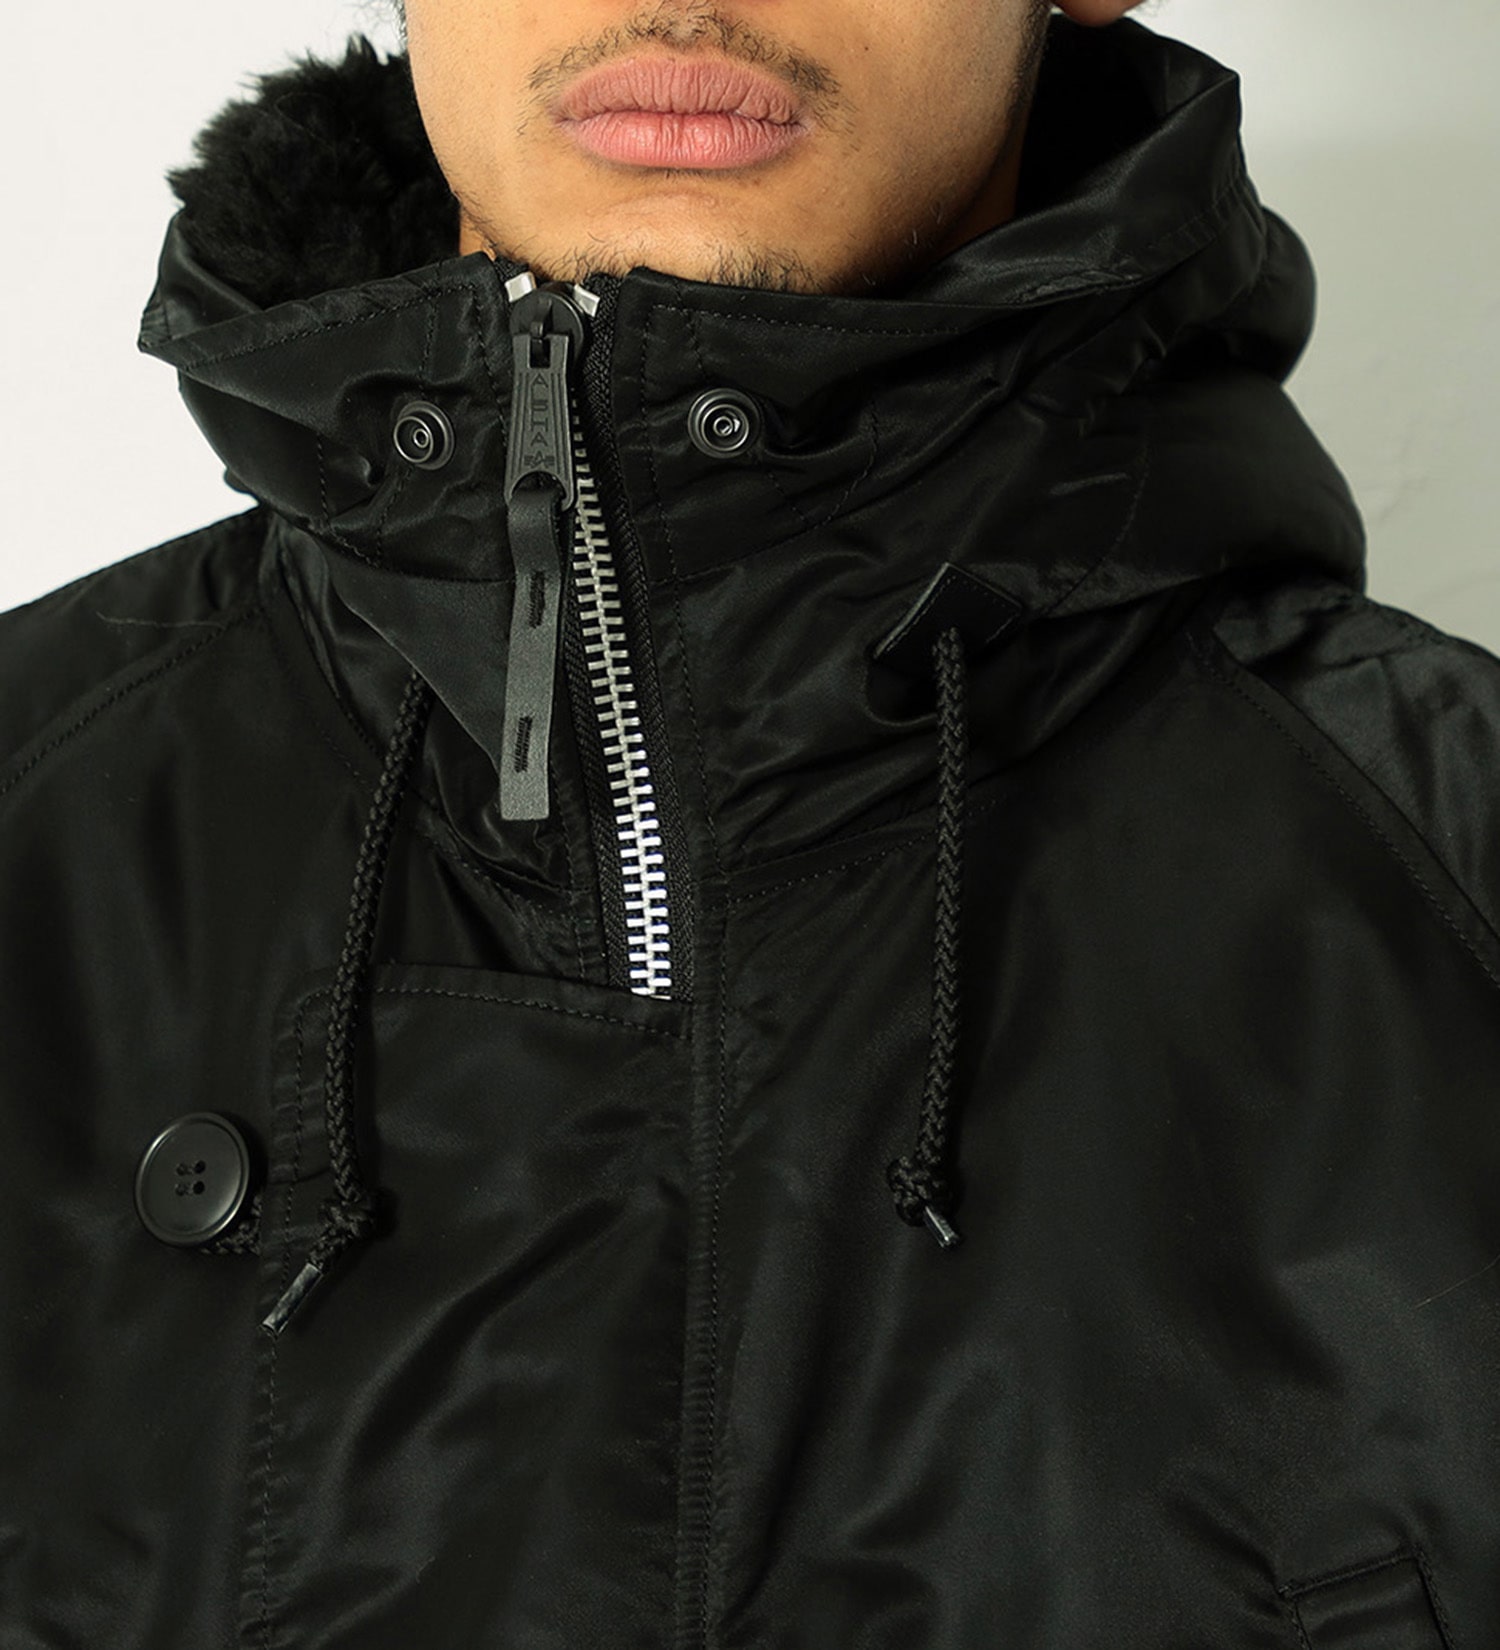 MEN FASHION Jackets Basic discount 85% Black XL Kappa waterproof jacket 